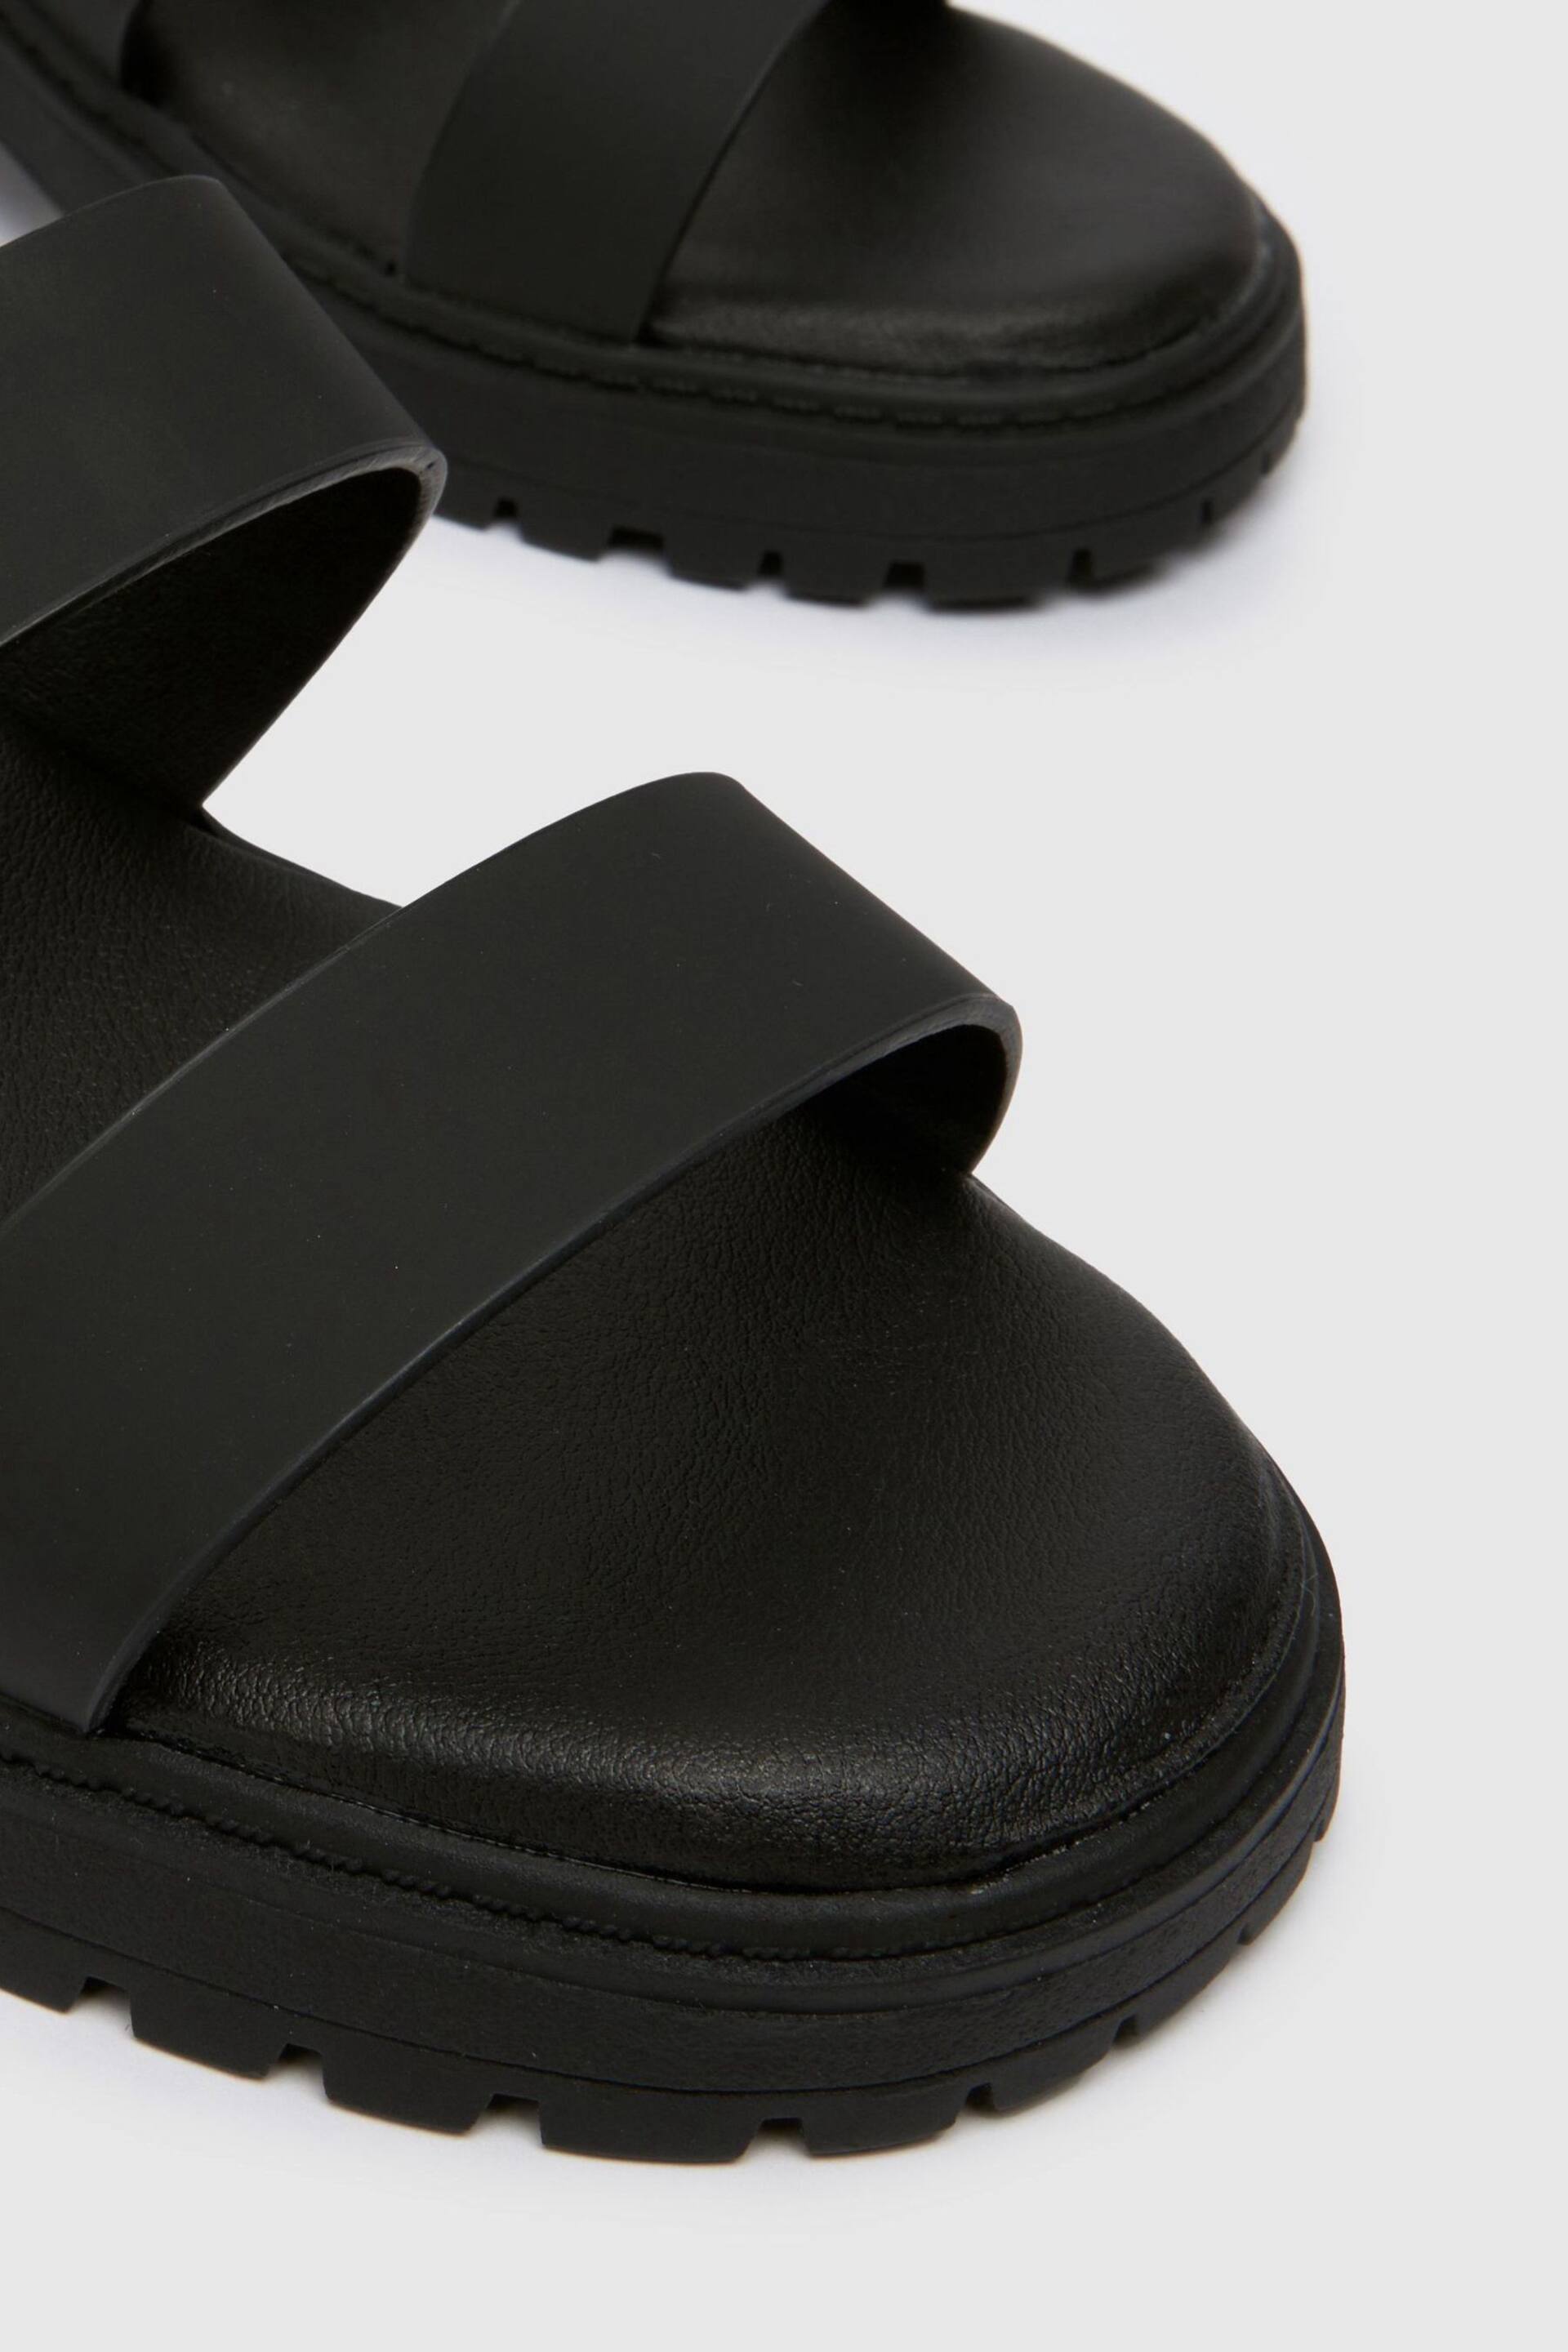 Schuh Taffy Heeled Sandals - Image 3 of 4